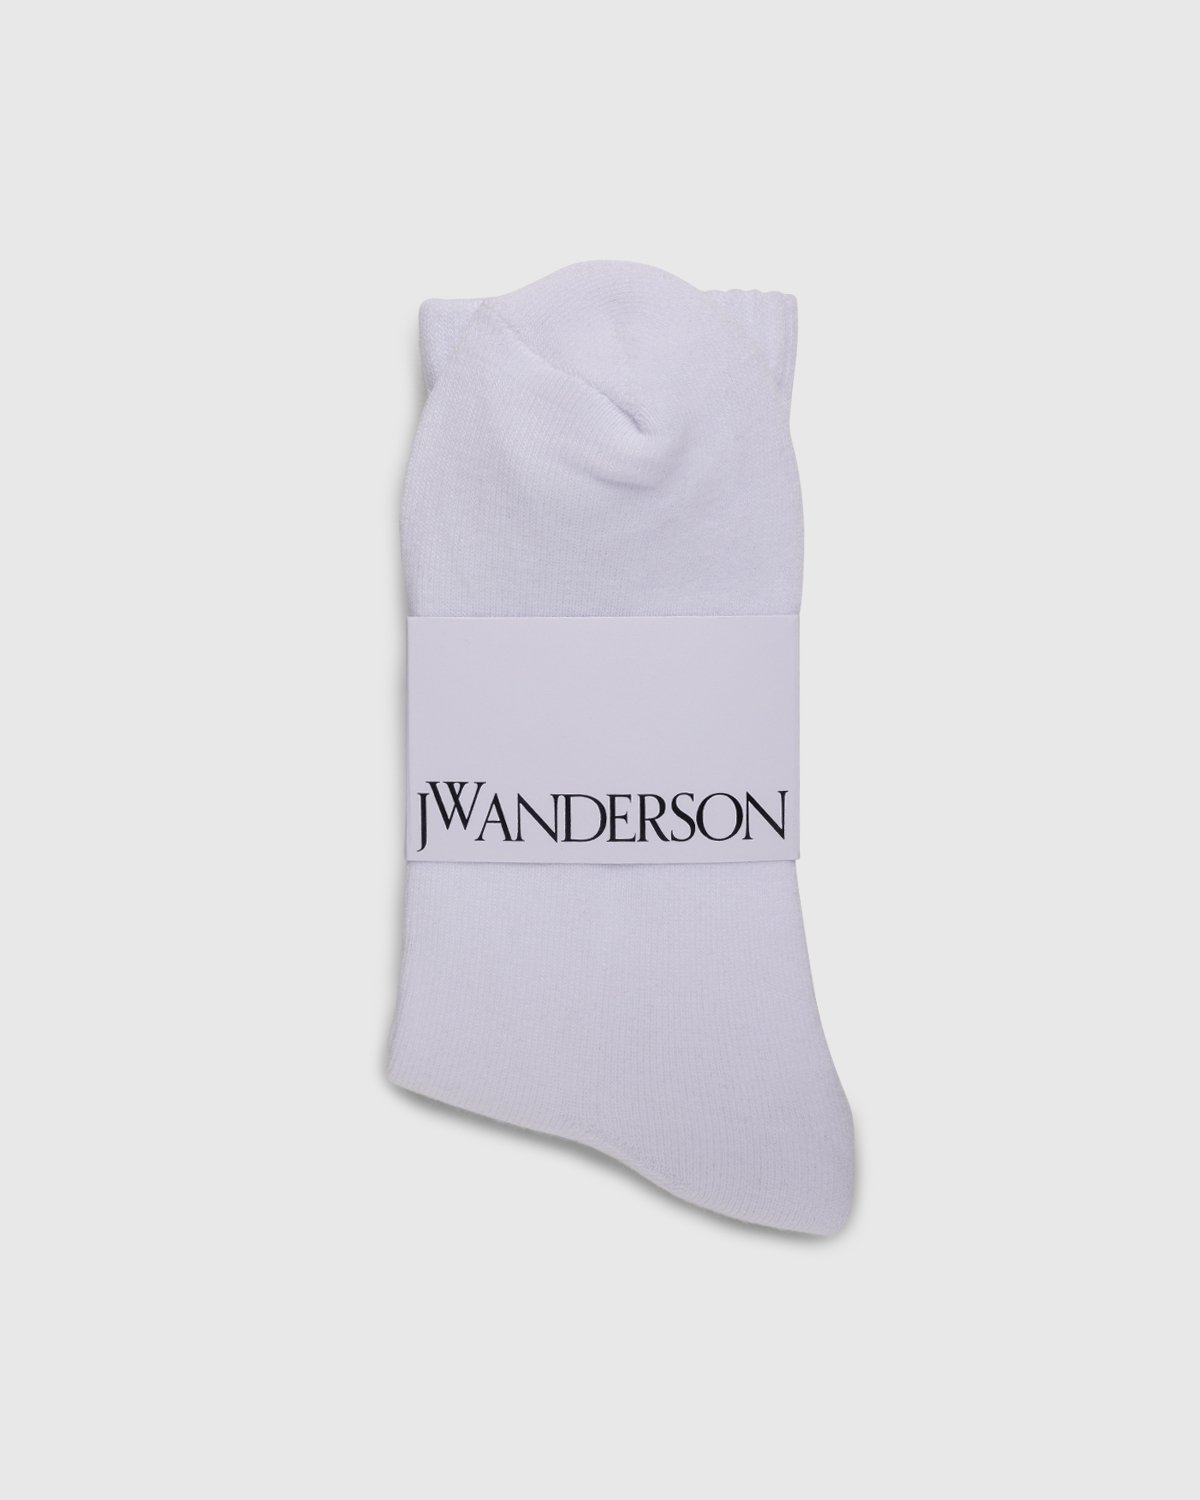 J.W. Anderson - JWA Logo Short Ankle Socks White/Black - Accessories - White - Image 2